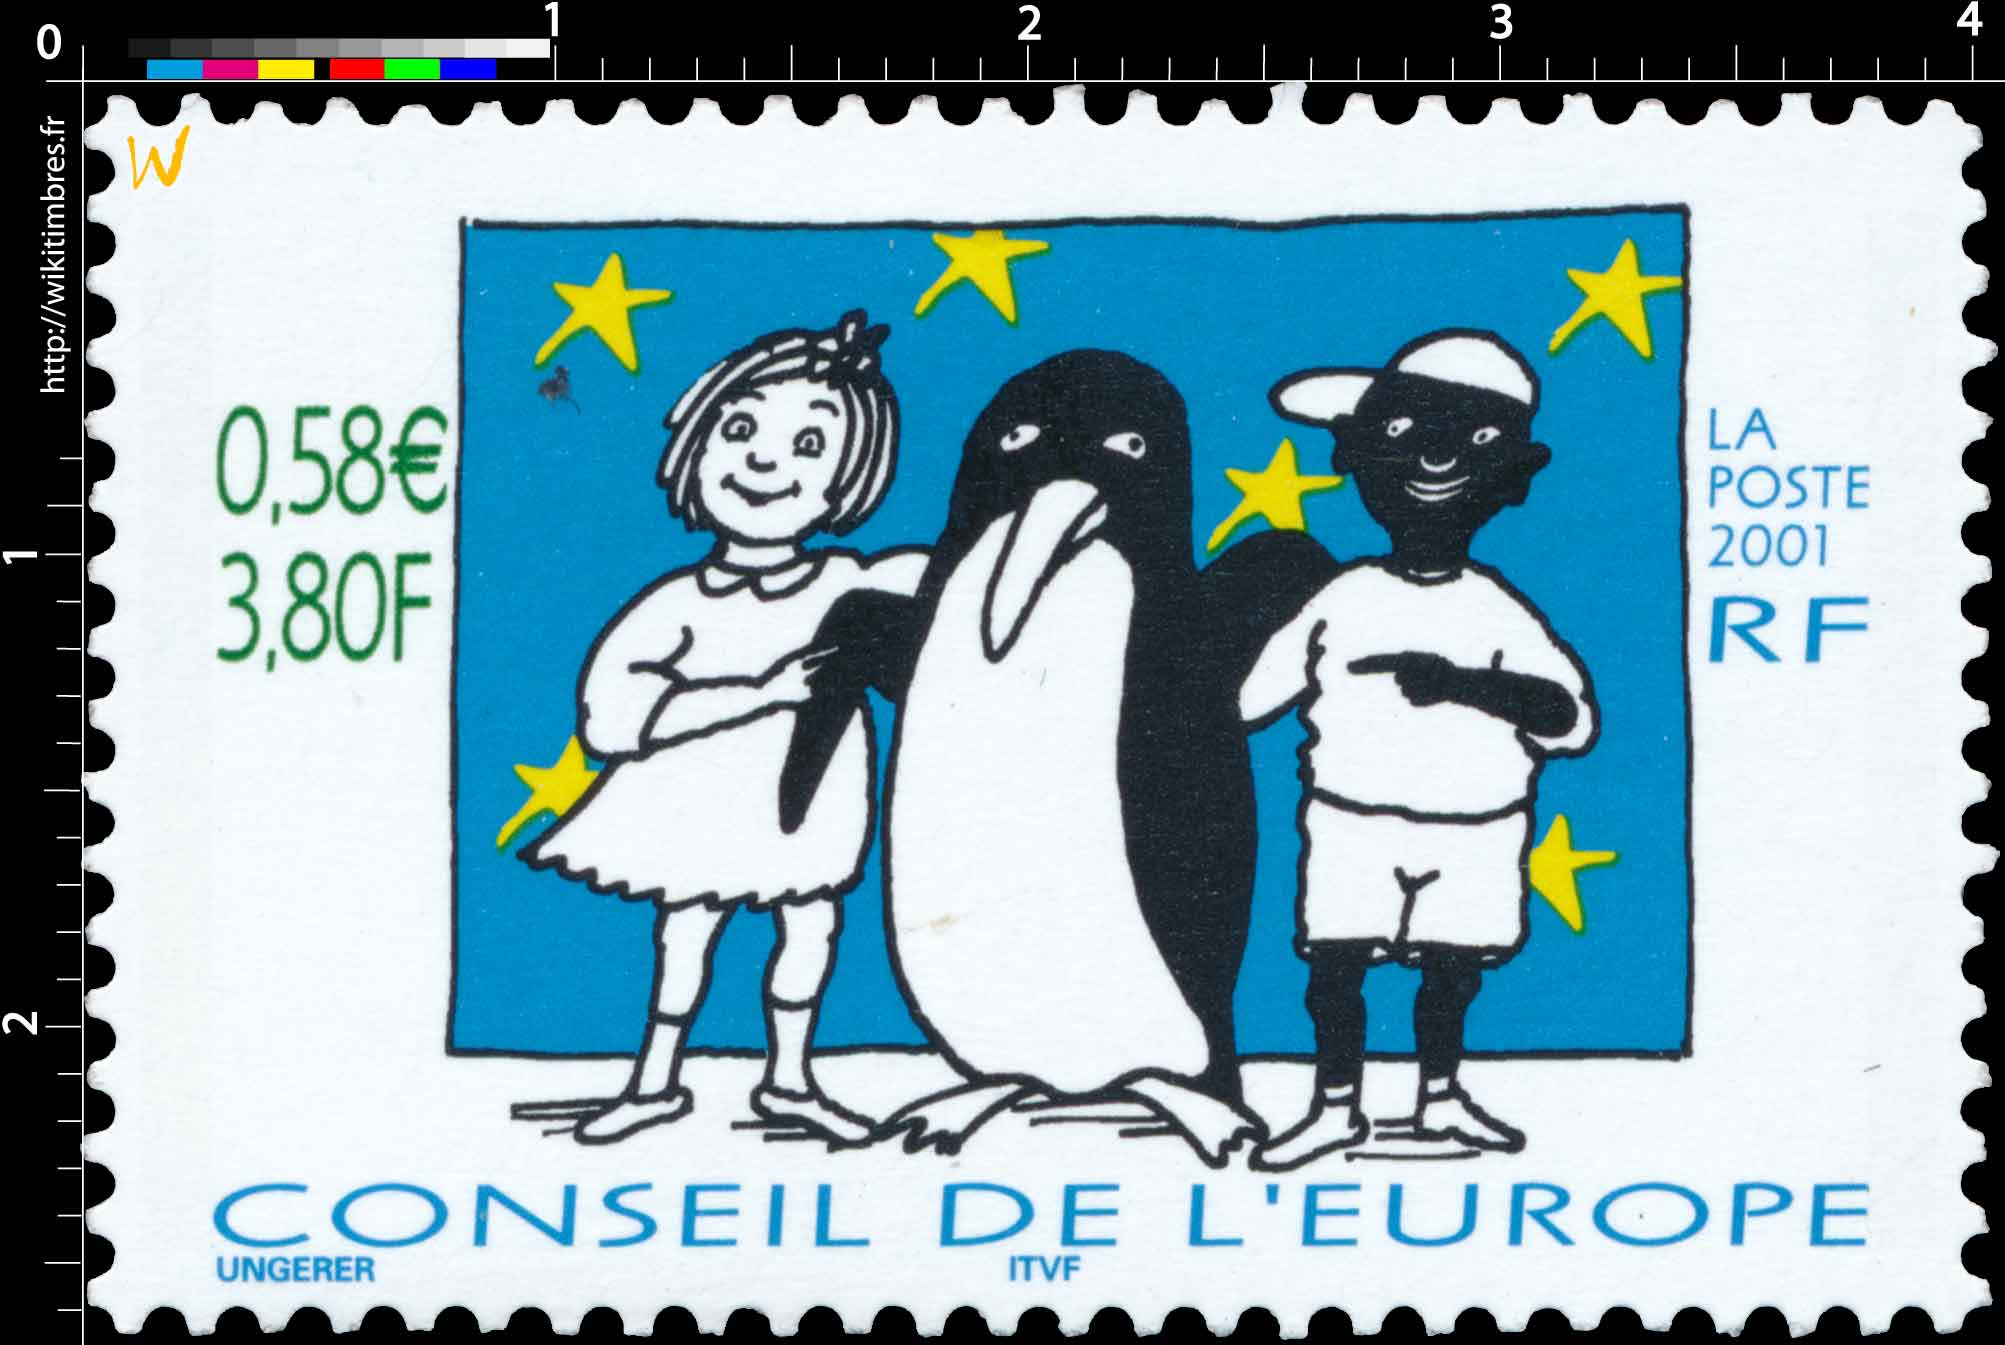 2001 CONSEIL DE L'EUROPE